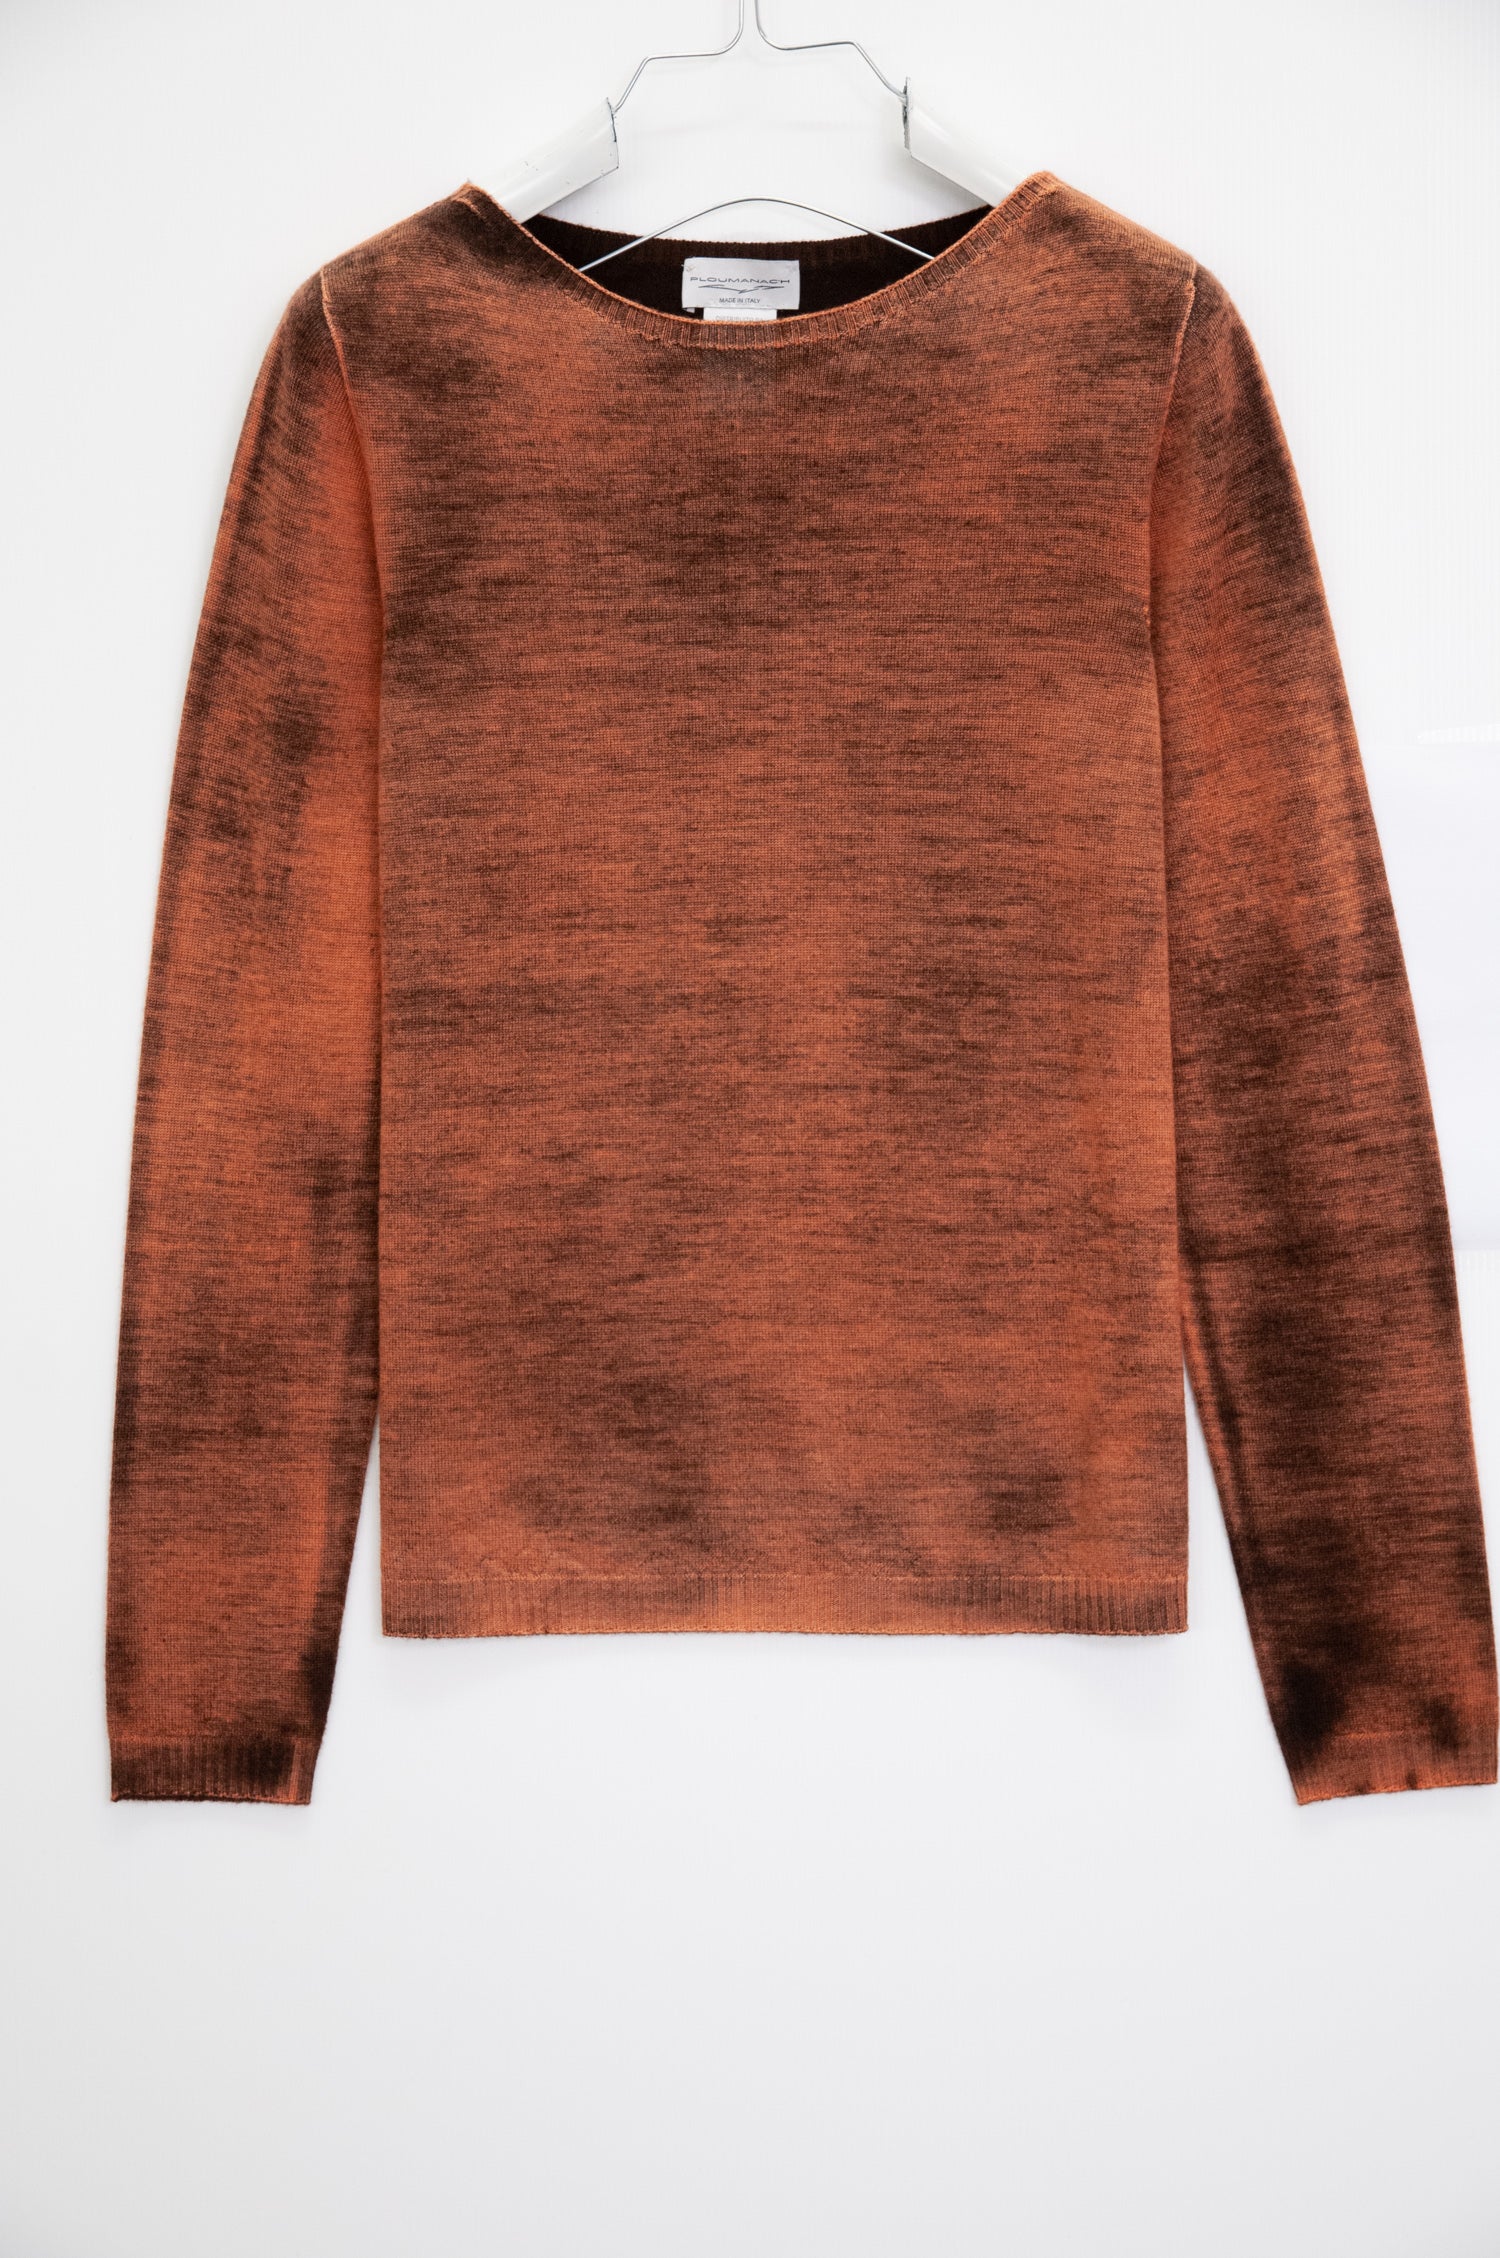 Melvich Rock Art Sweater - Volcanic